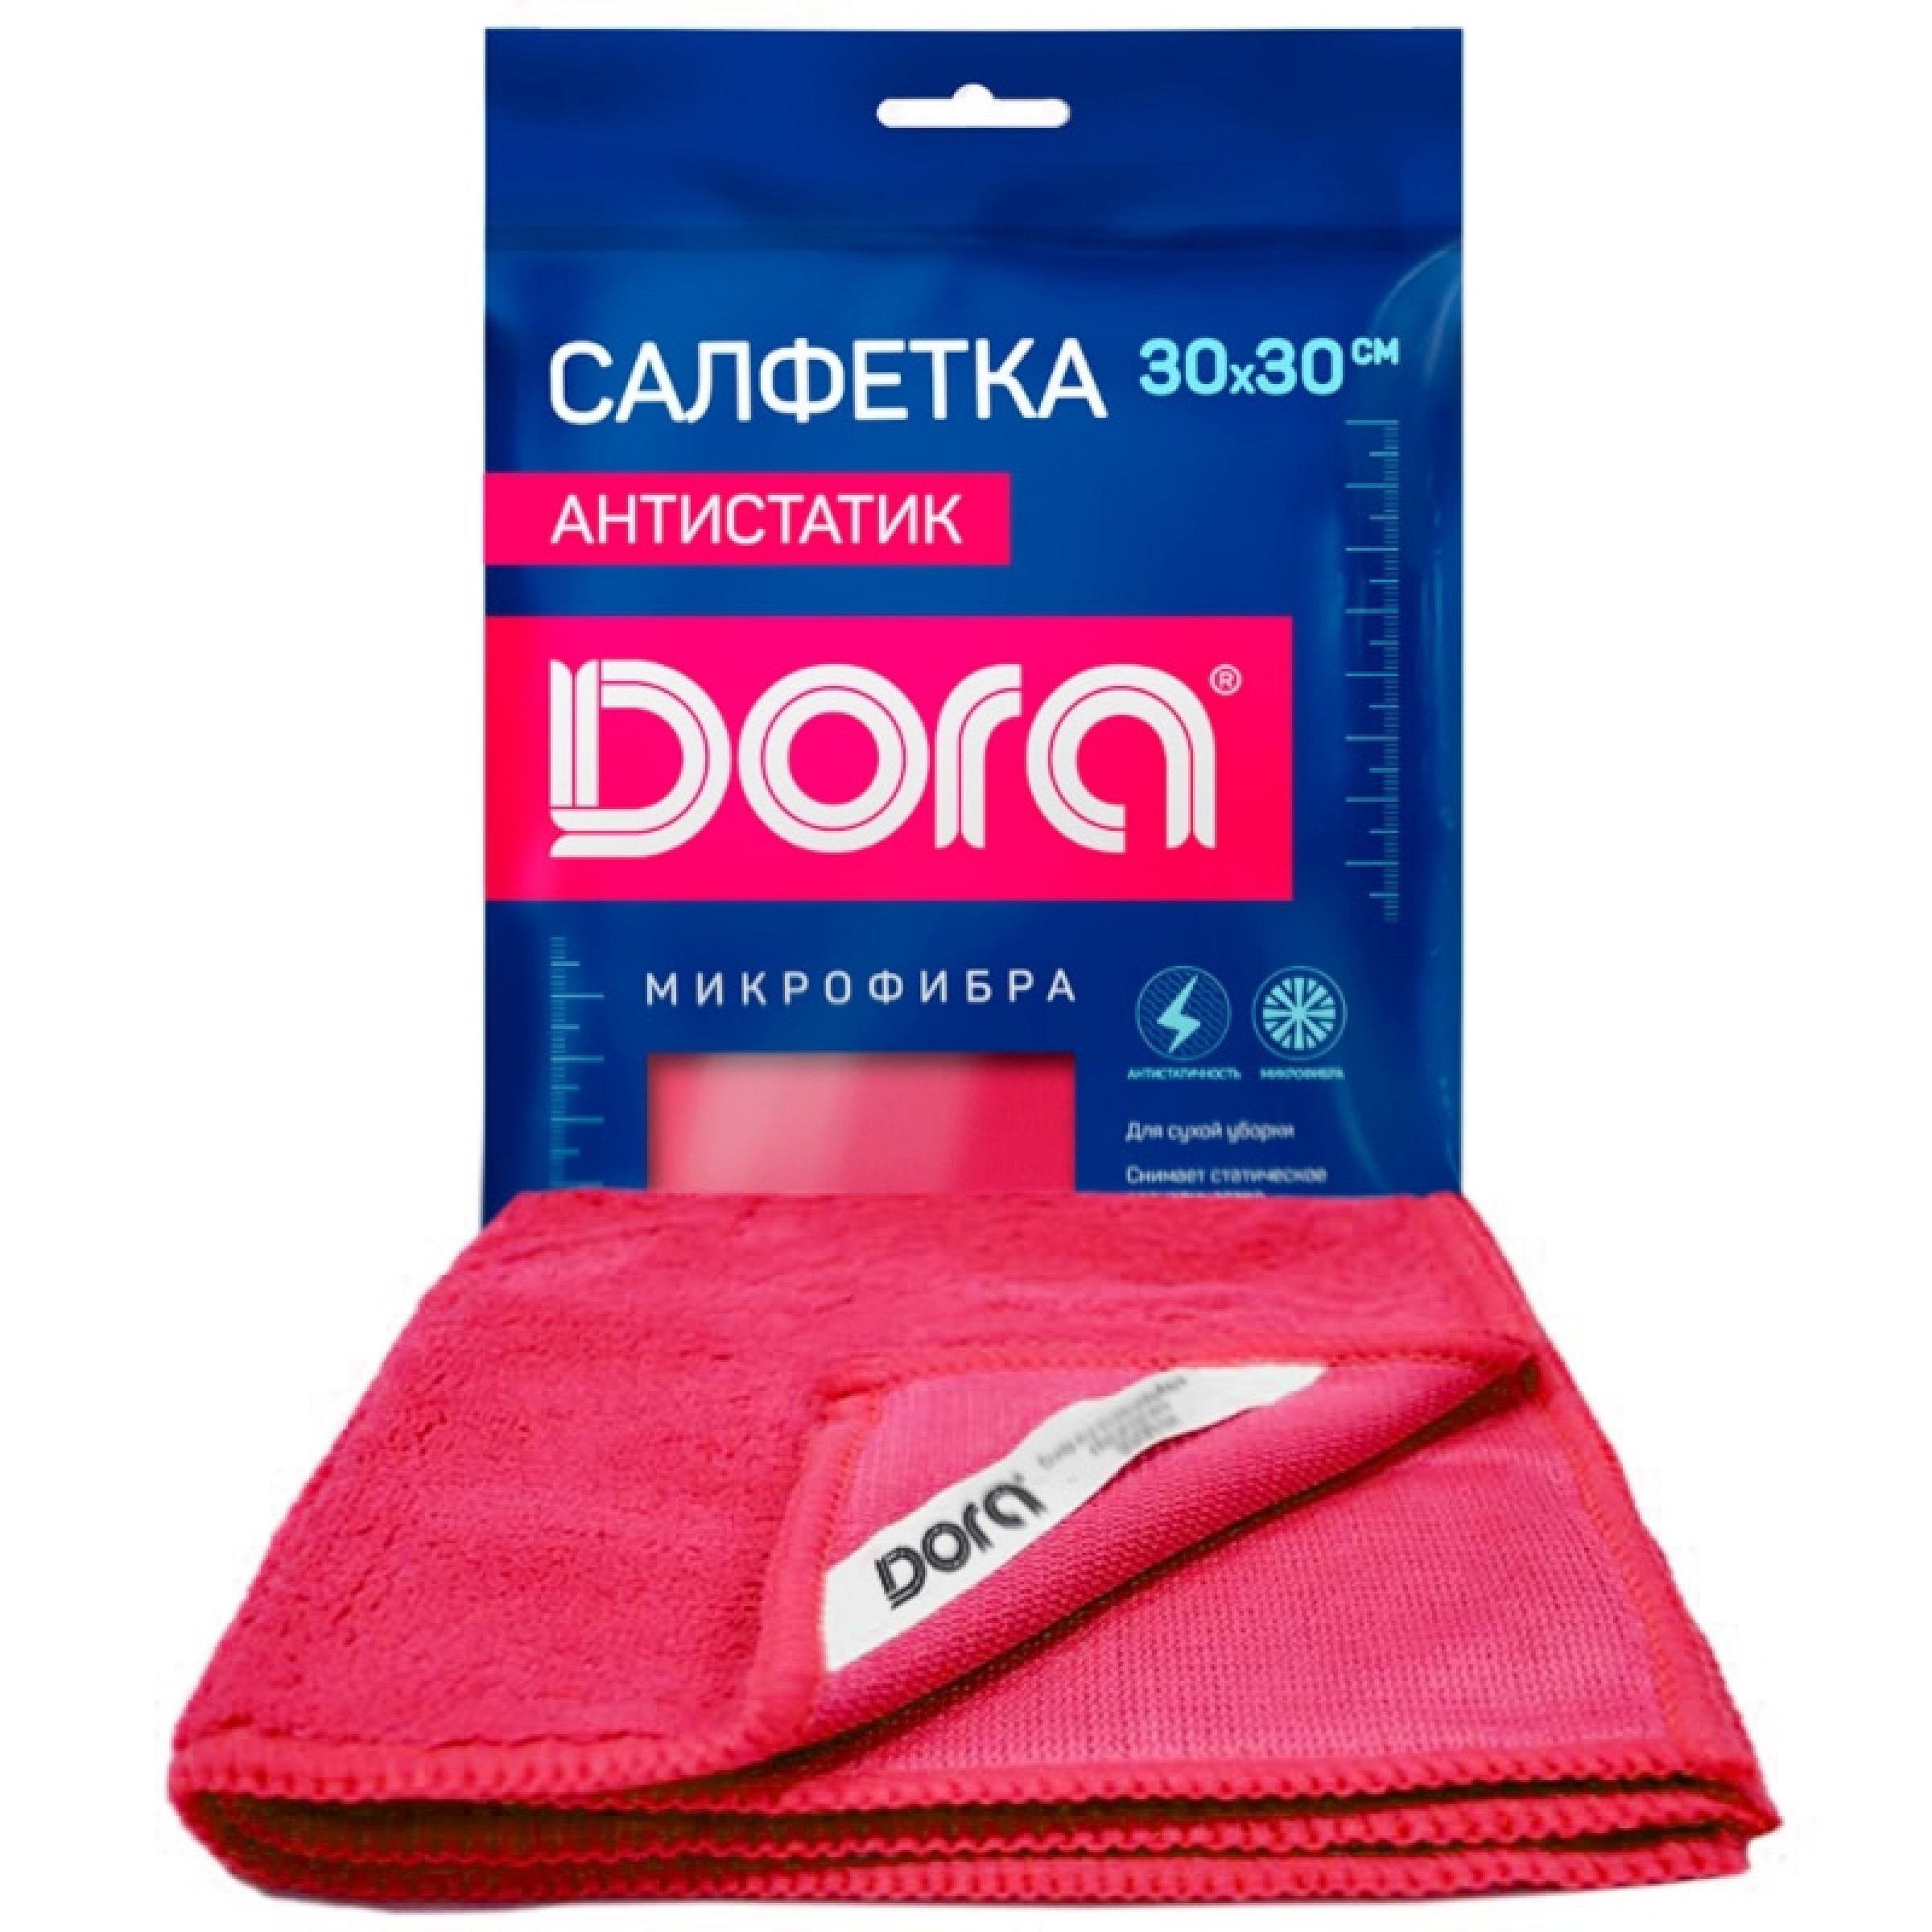 Салфетка из микрофибры Dora Антистатик 30 х 30 см, 1 шт.